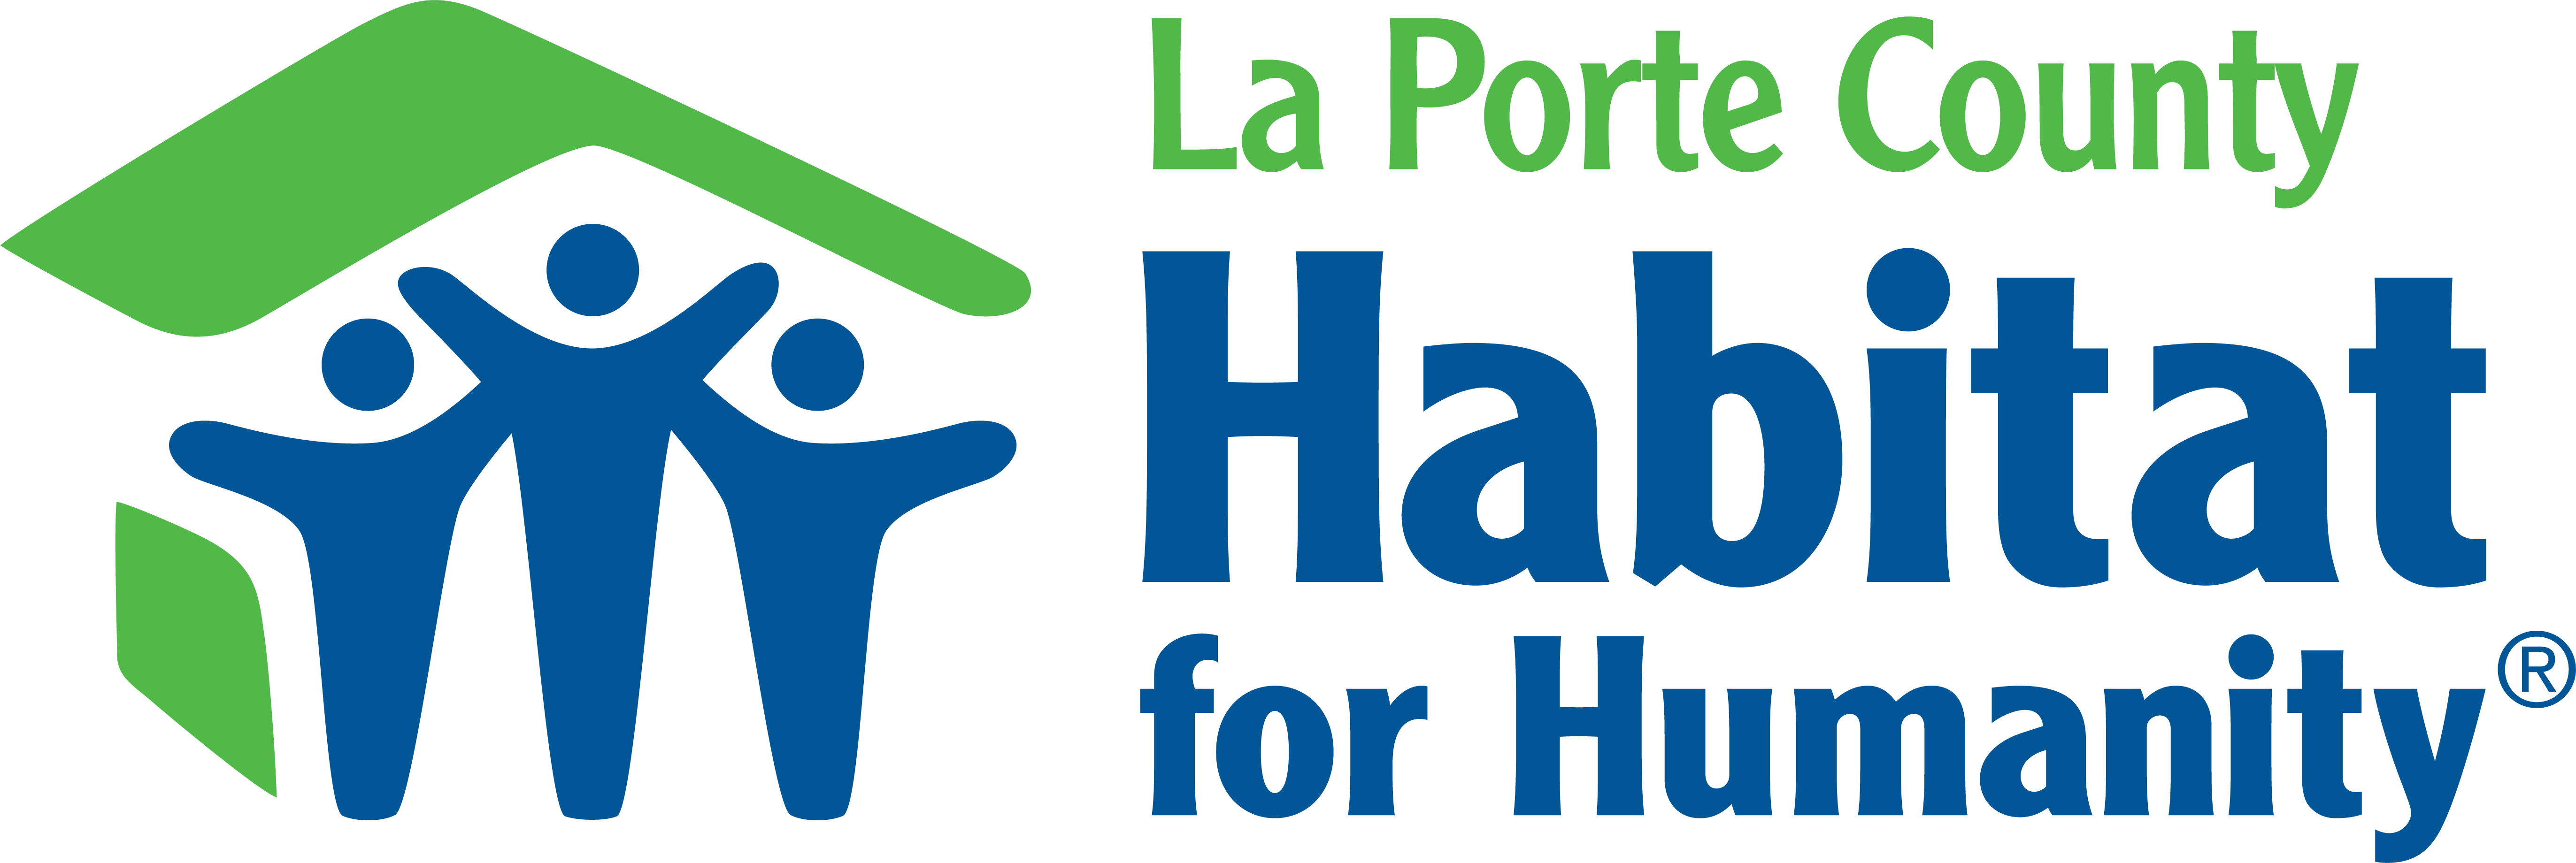 LaPorte County Habitat for Humanity